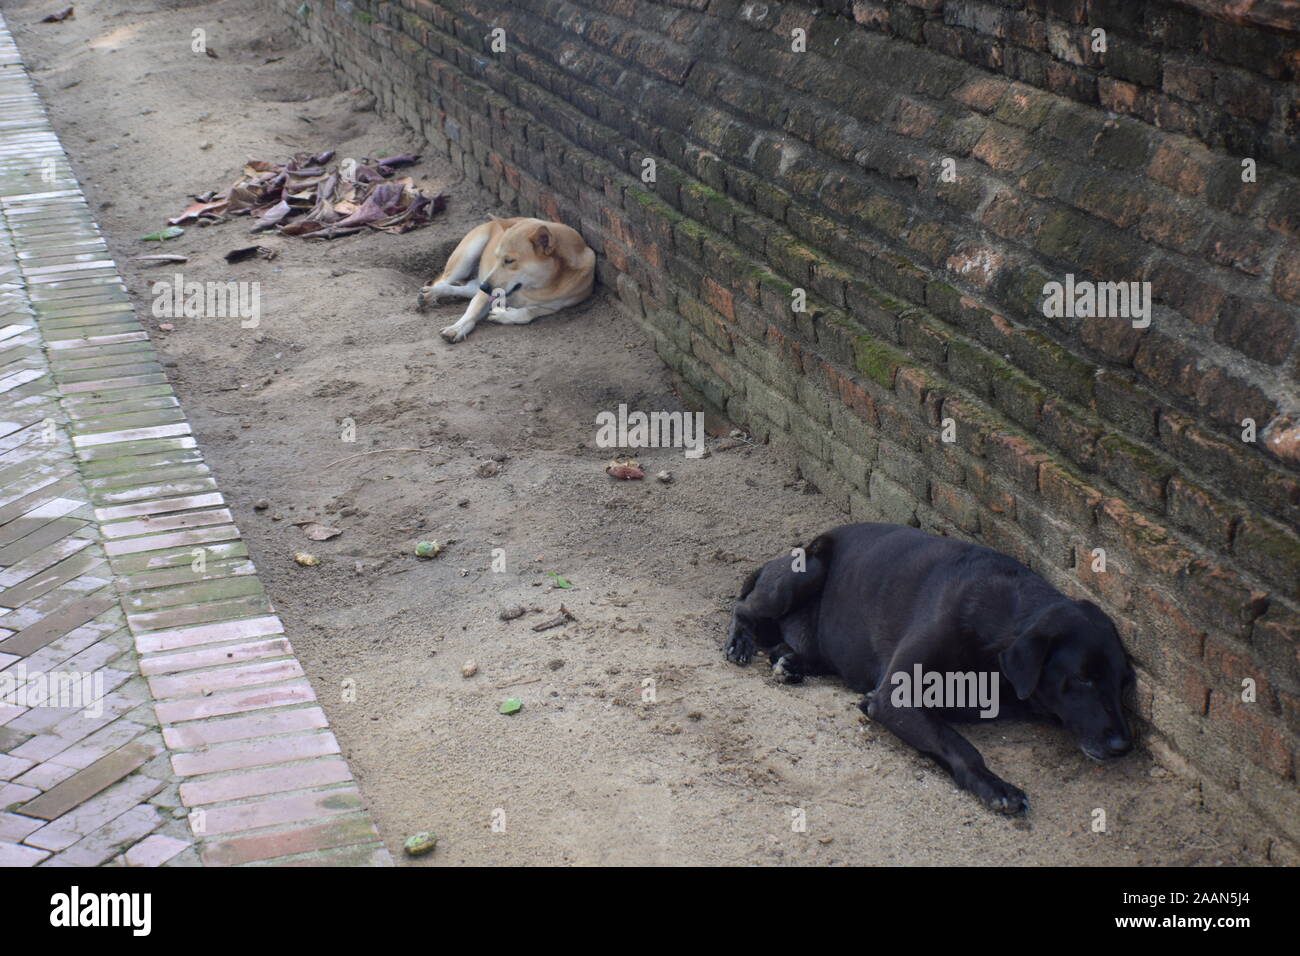 sleeping dogs thailand Stock Photo